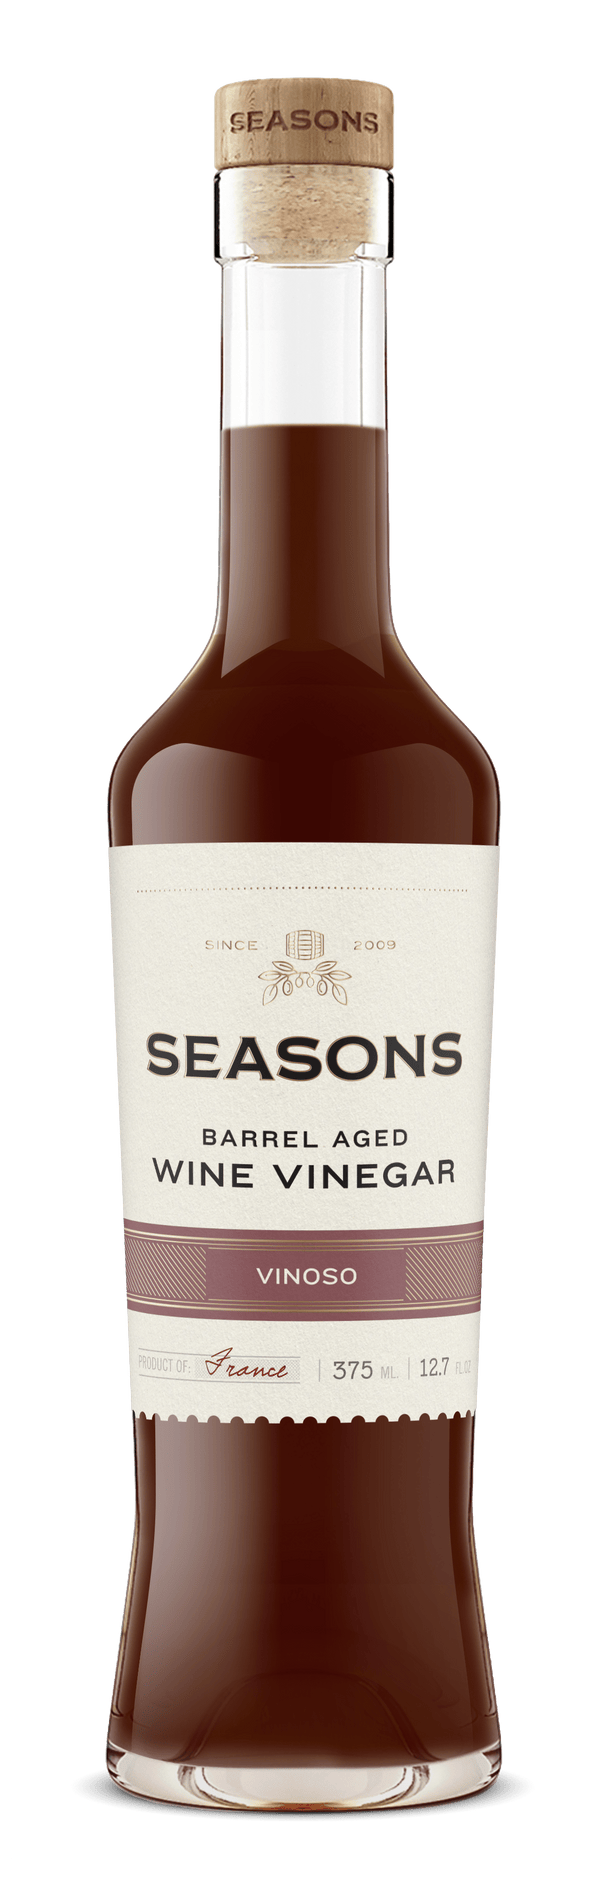 Seasons Taproom Wine Vinegar 375mL Vinoso